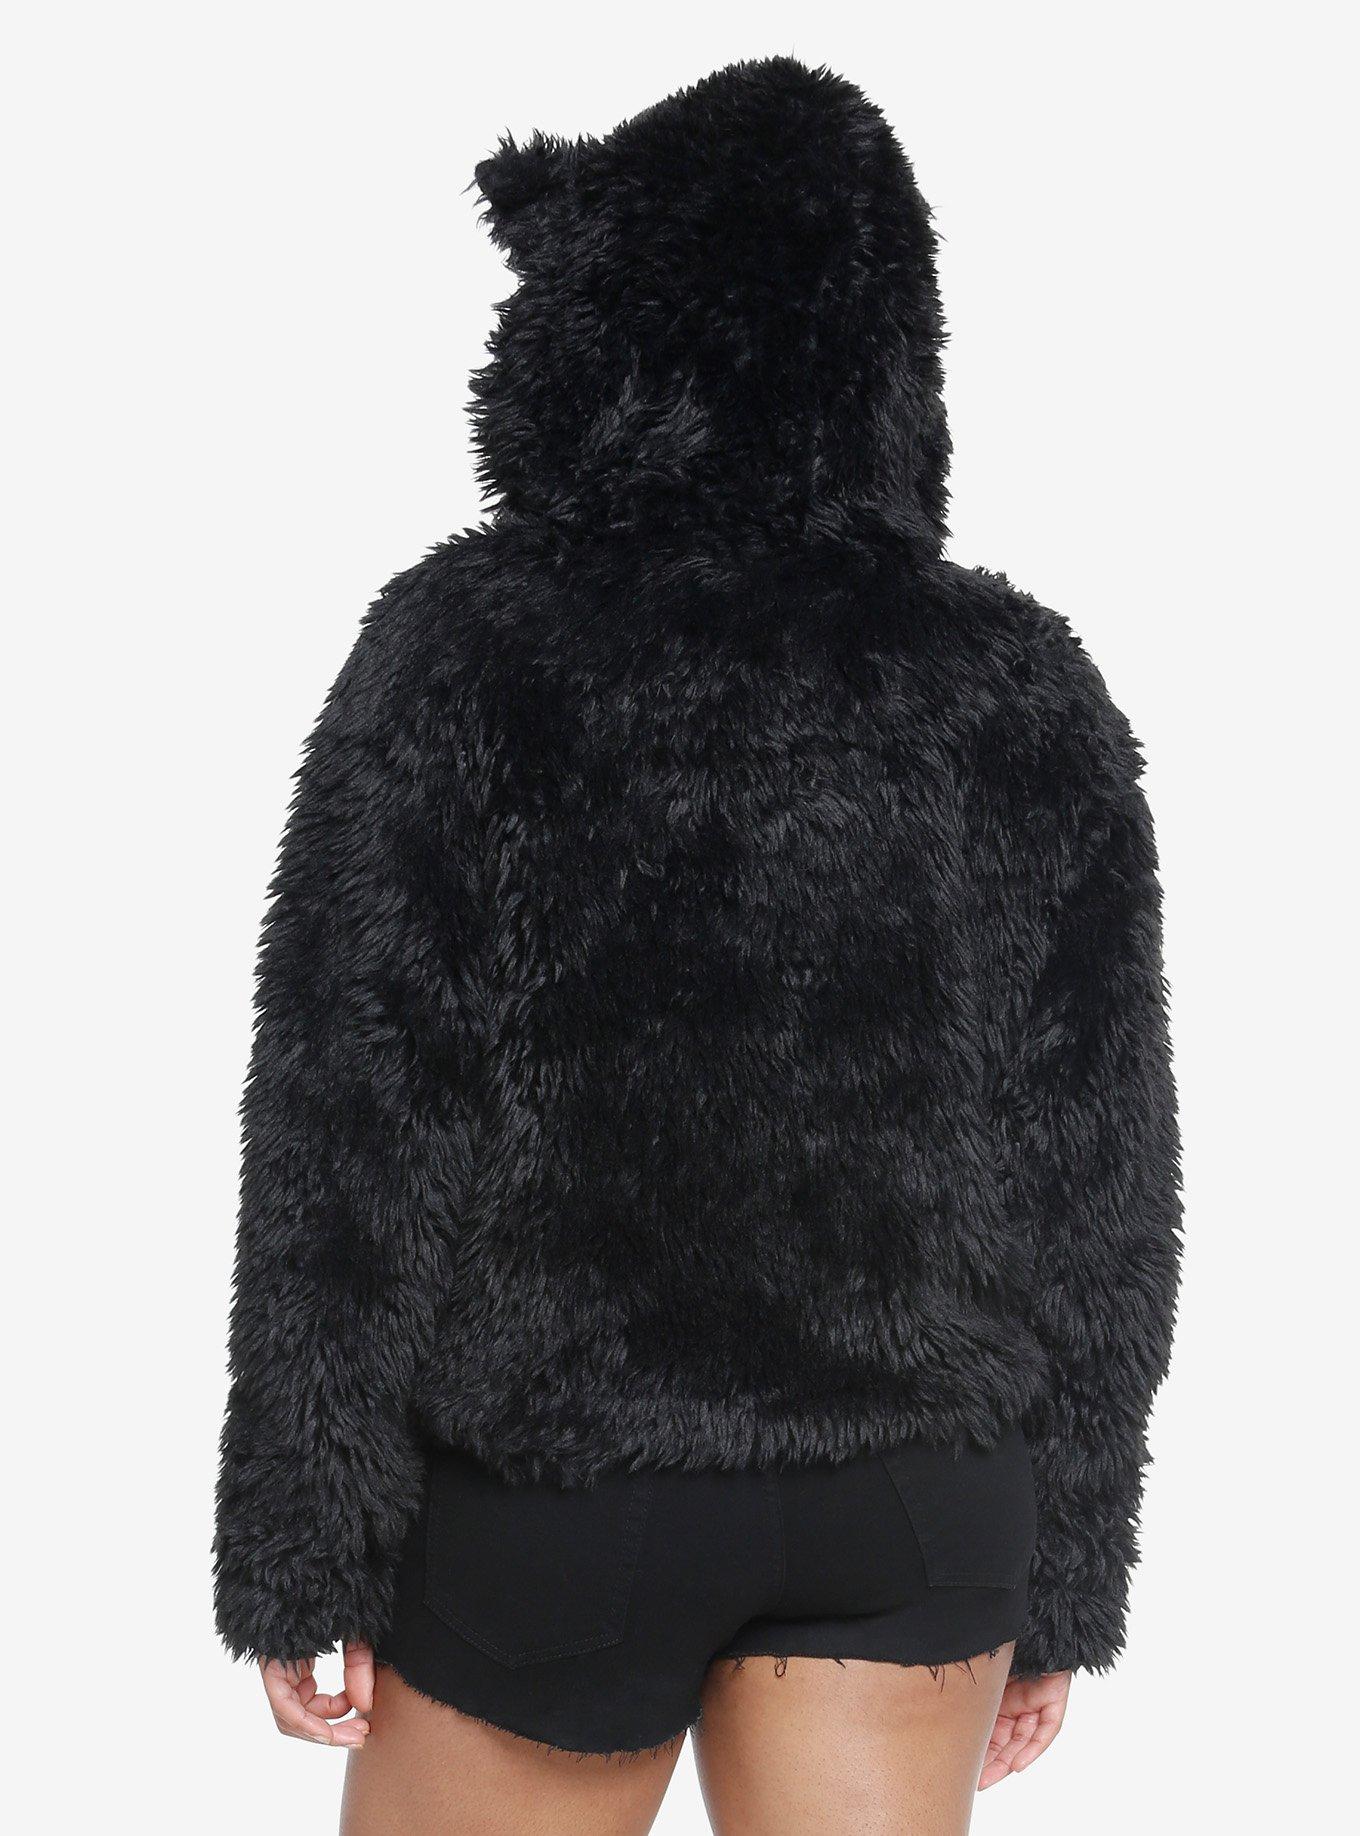 Cosmic Aura Black Cat Grommet Faux Fur Girls Jacket, BLACK, alternate